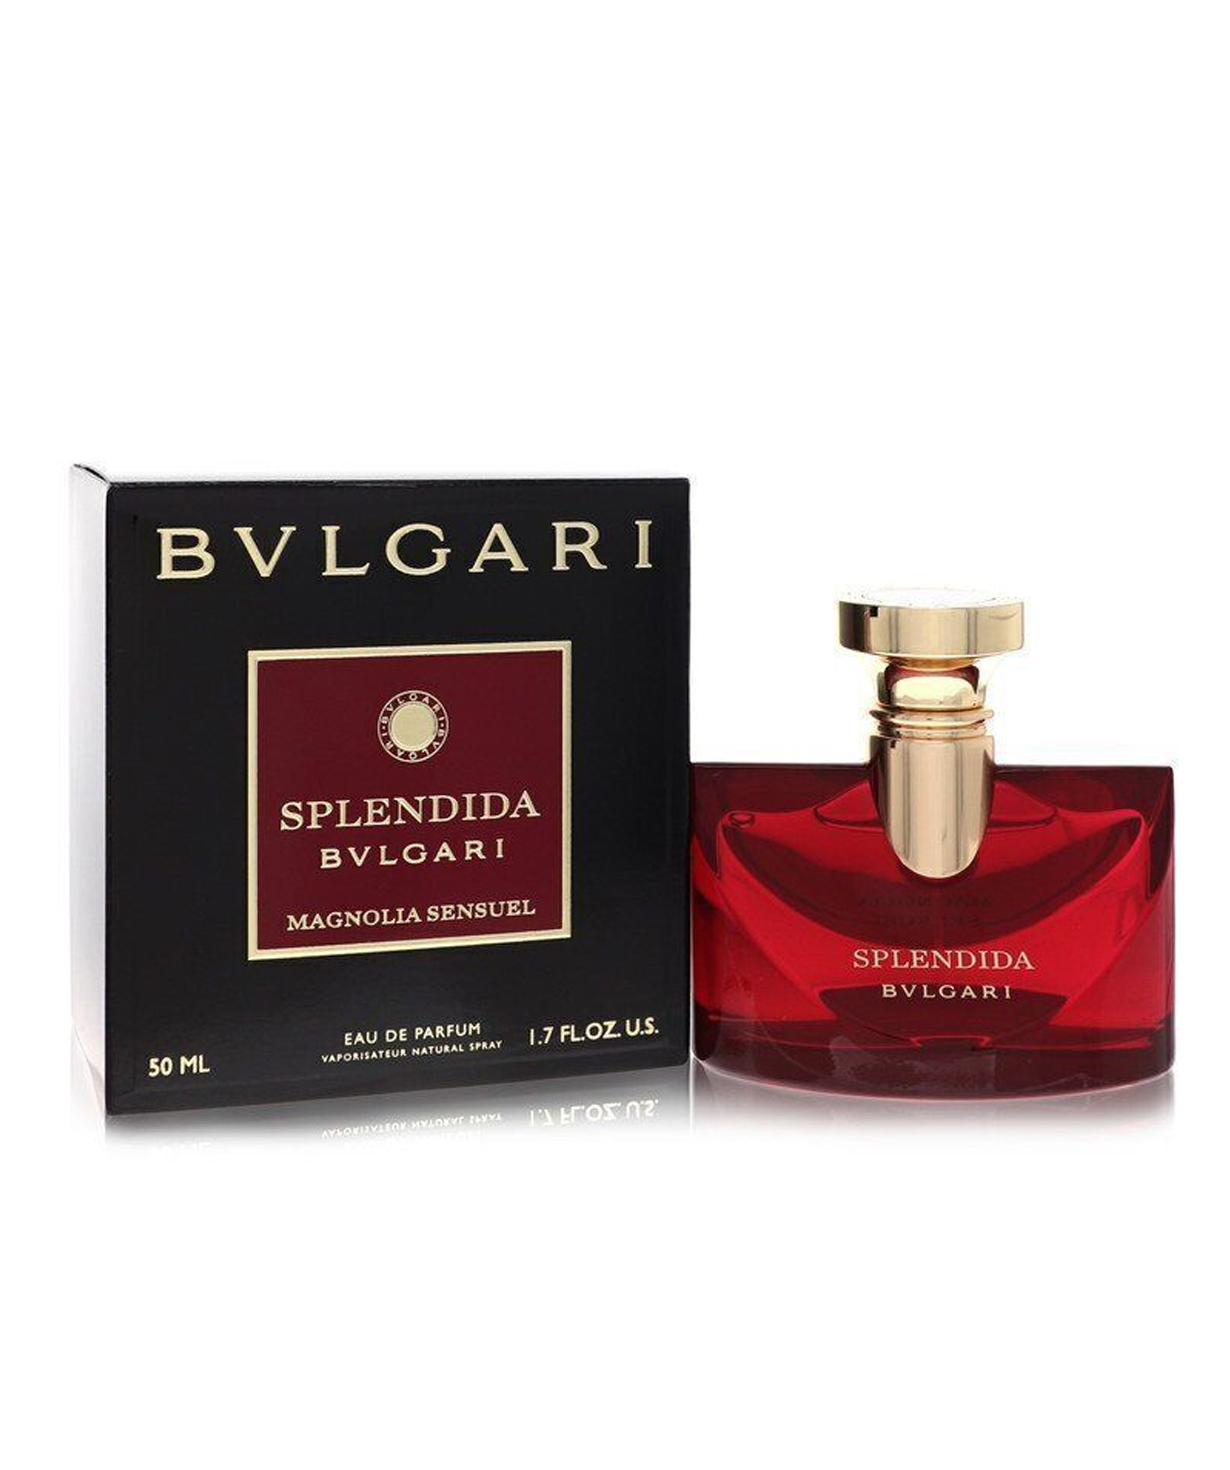 Perfume «Bvlgari» Splendida Magnolia Sensuel, for women, 50 ml